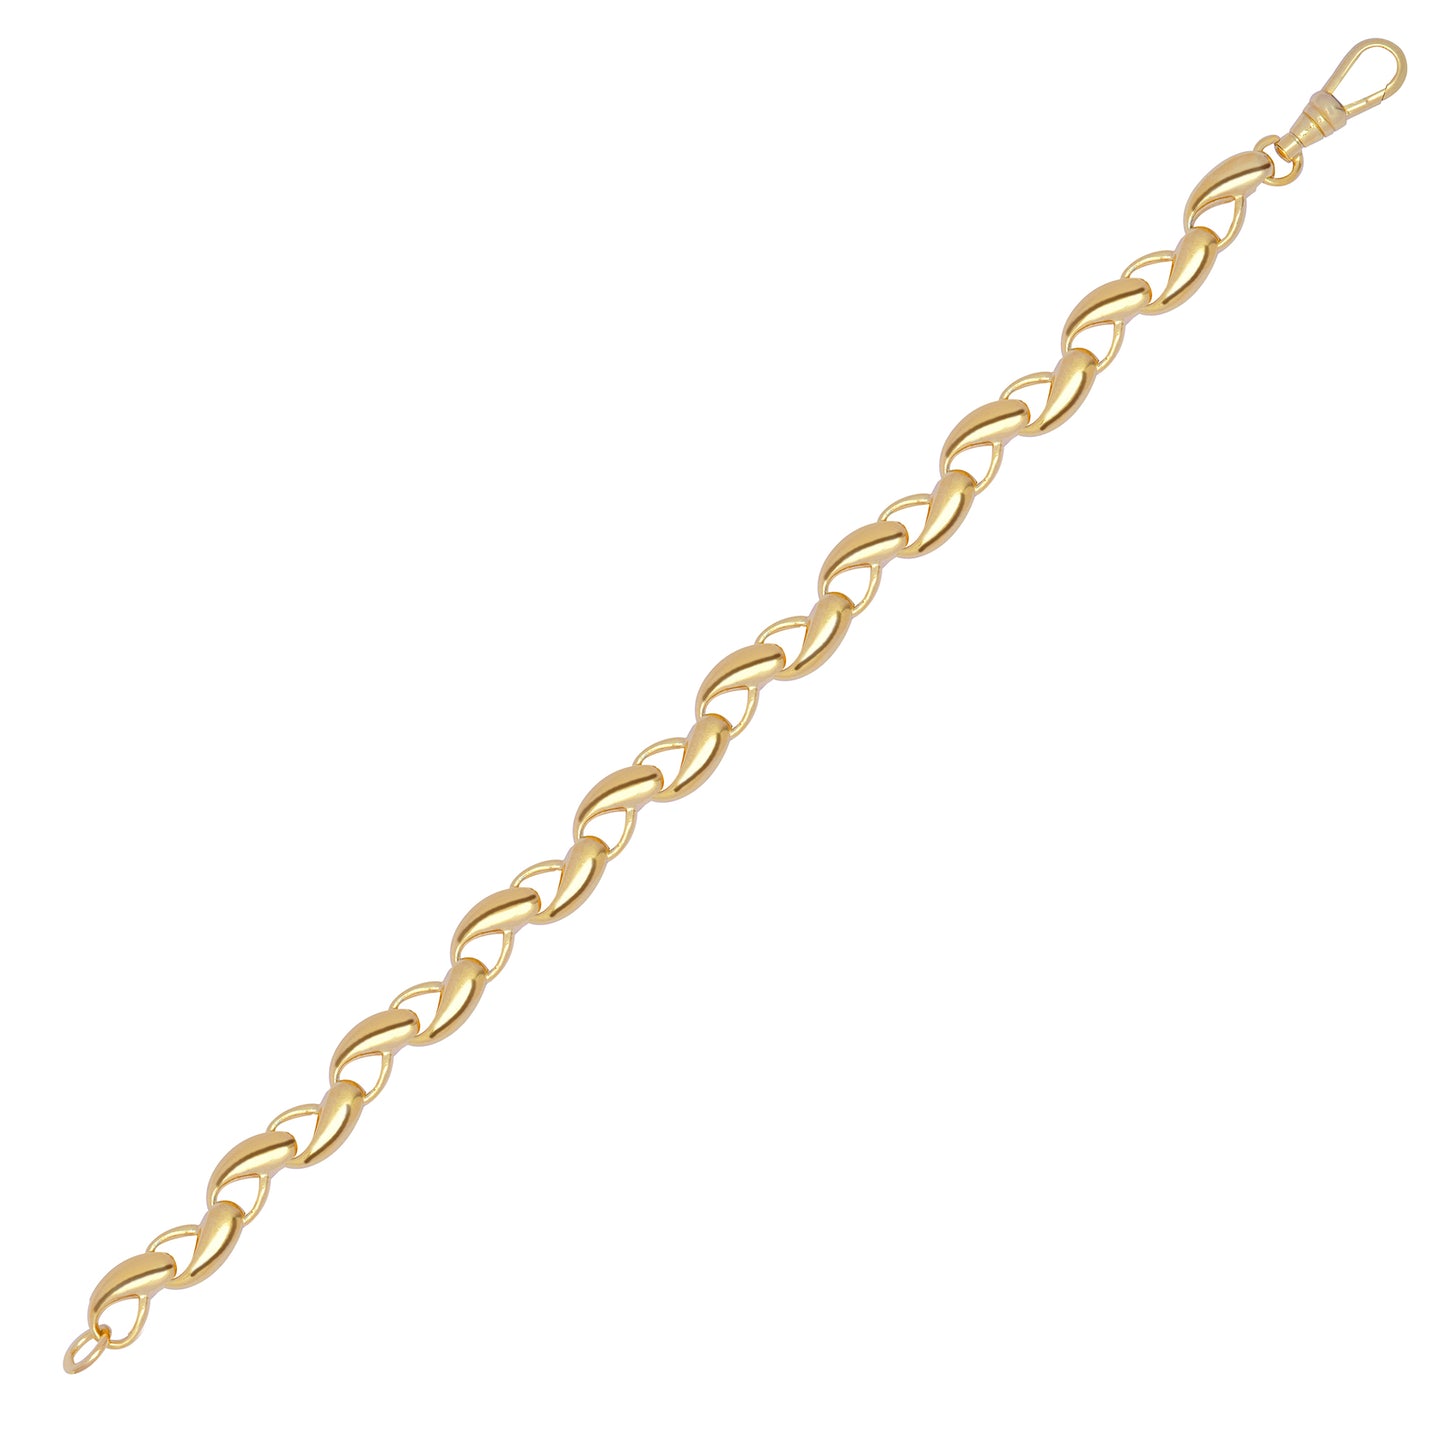 9ct Gold  Rain Drop Waves 8mm Chain Link Bracelet, 7.5 inch 19cm - JBB394